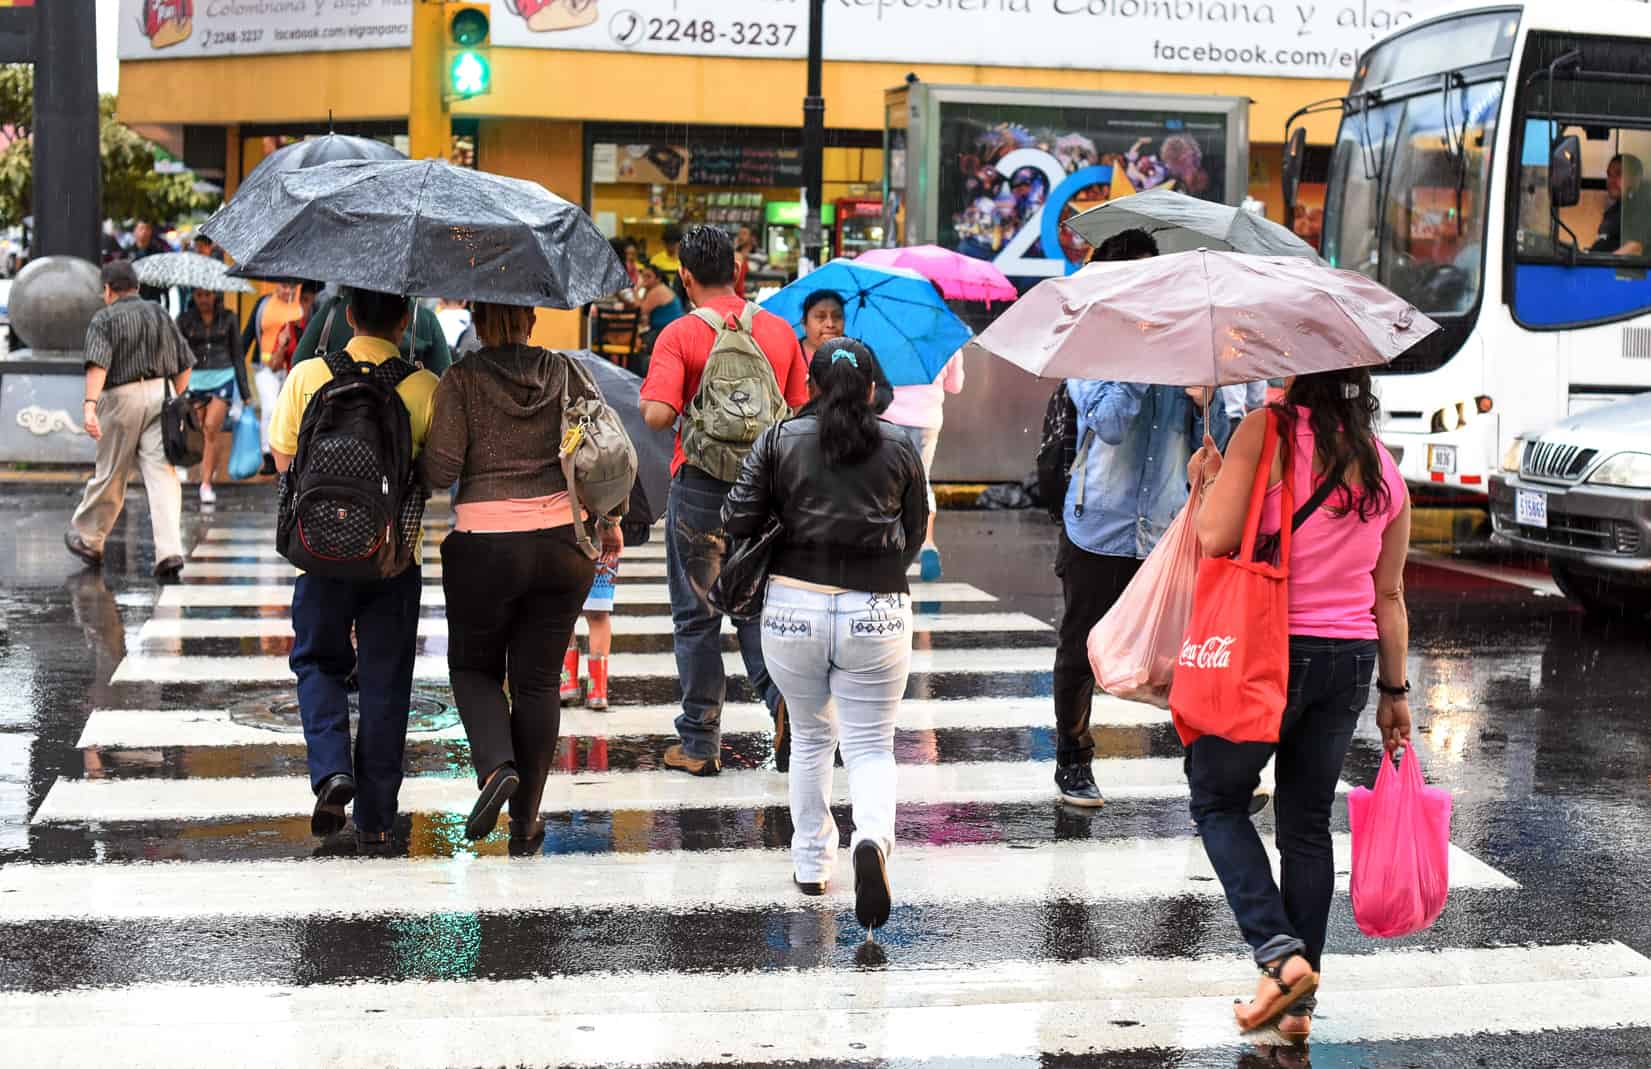 Rains, rainy season in Costa Rica.